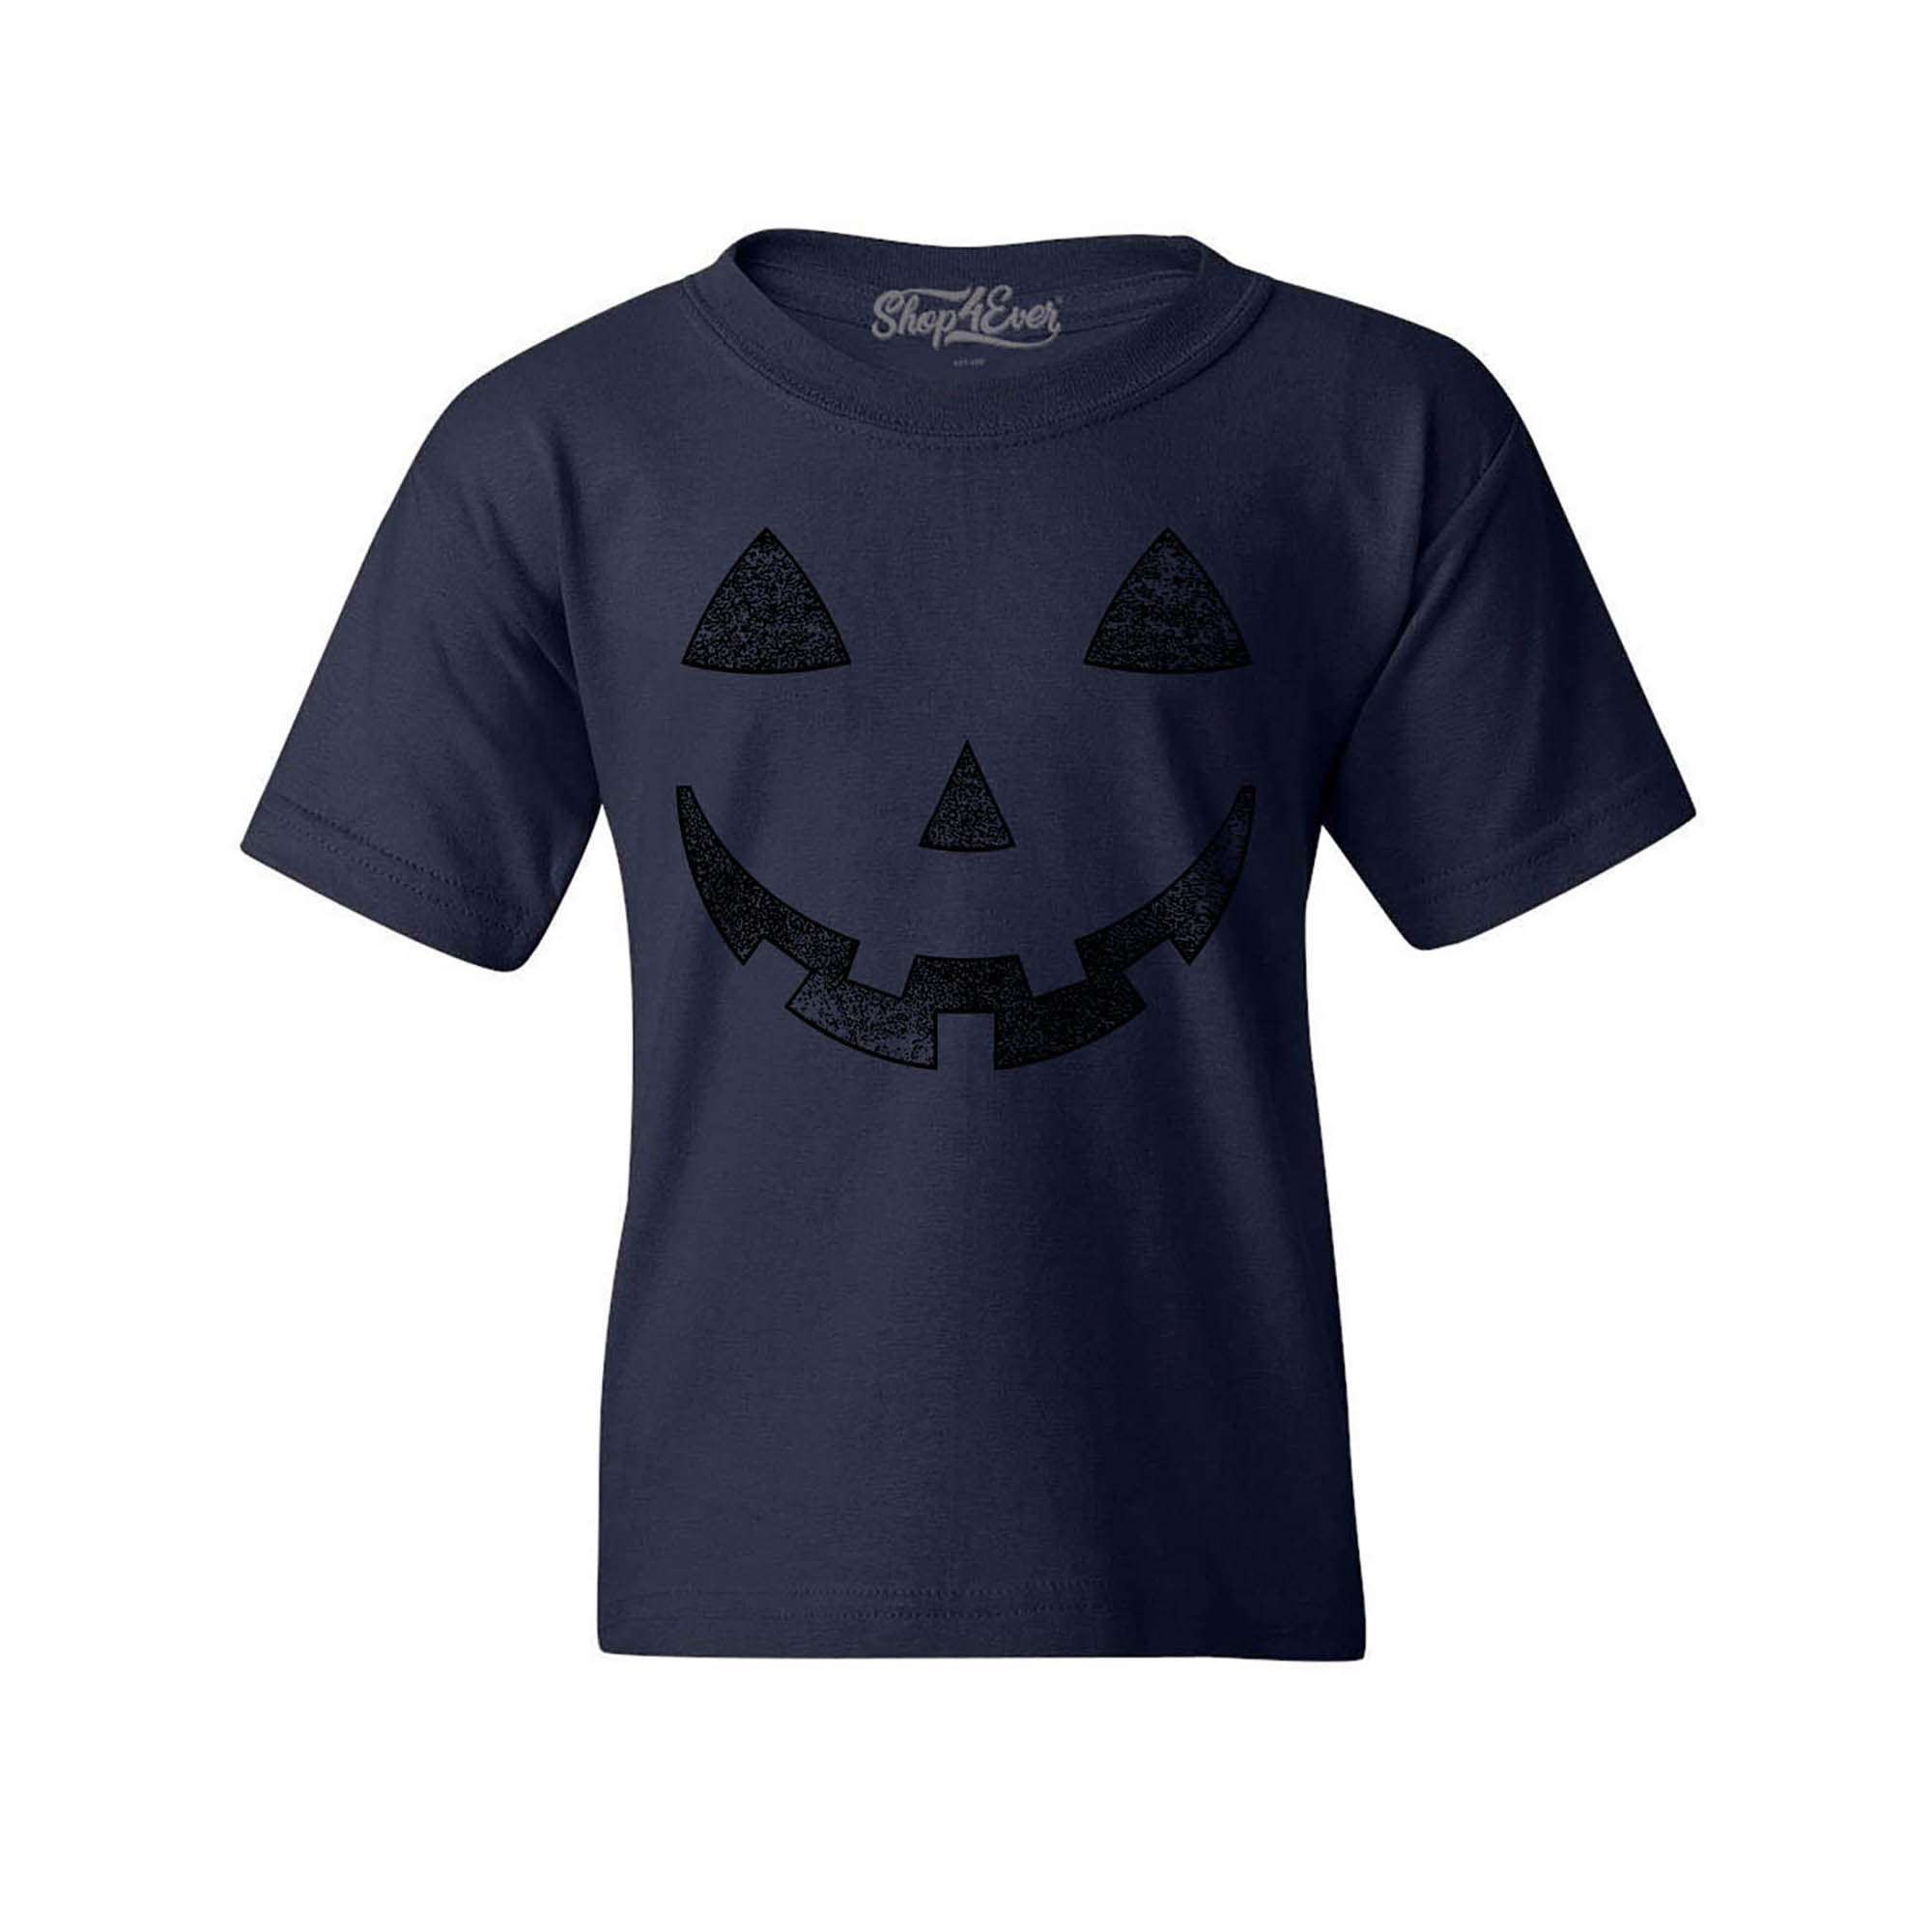 Jack O' Lantern Halloween Pumpkin Costume Youth's T-Shirt